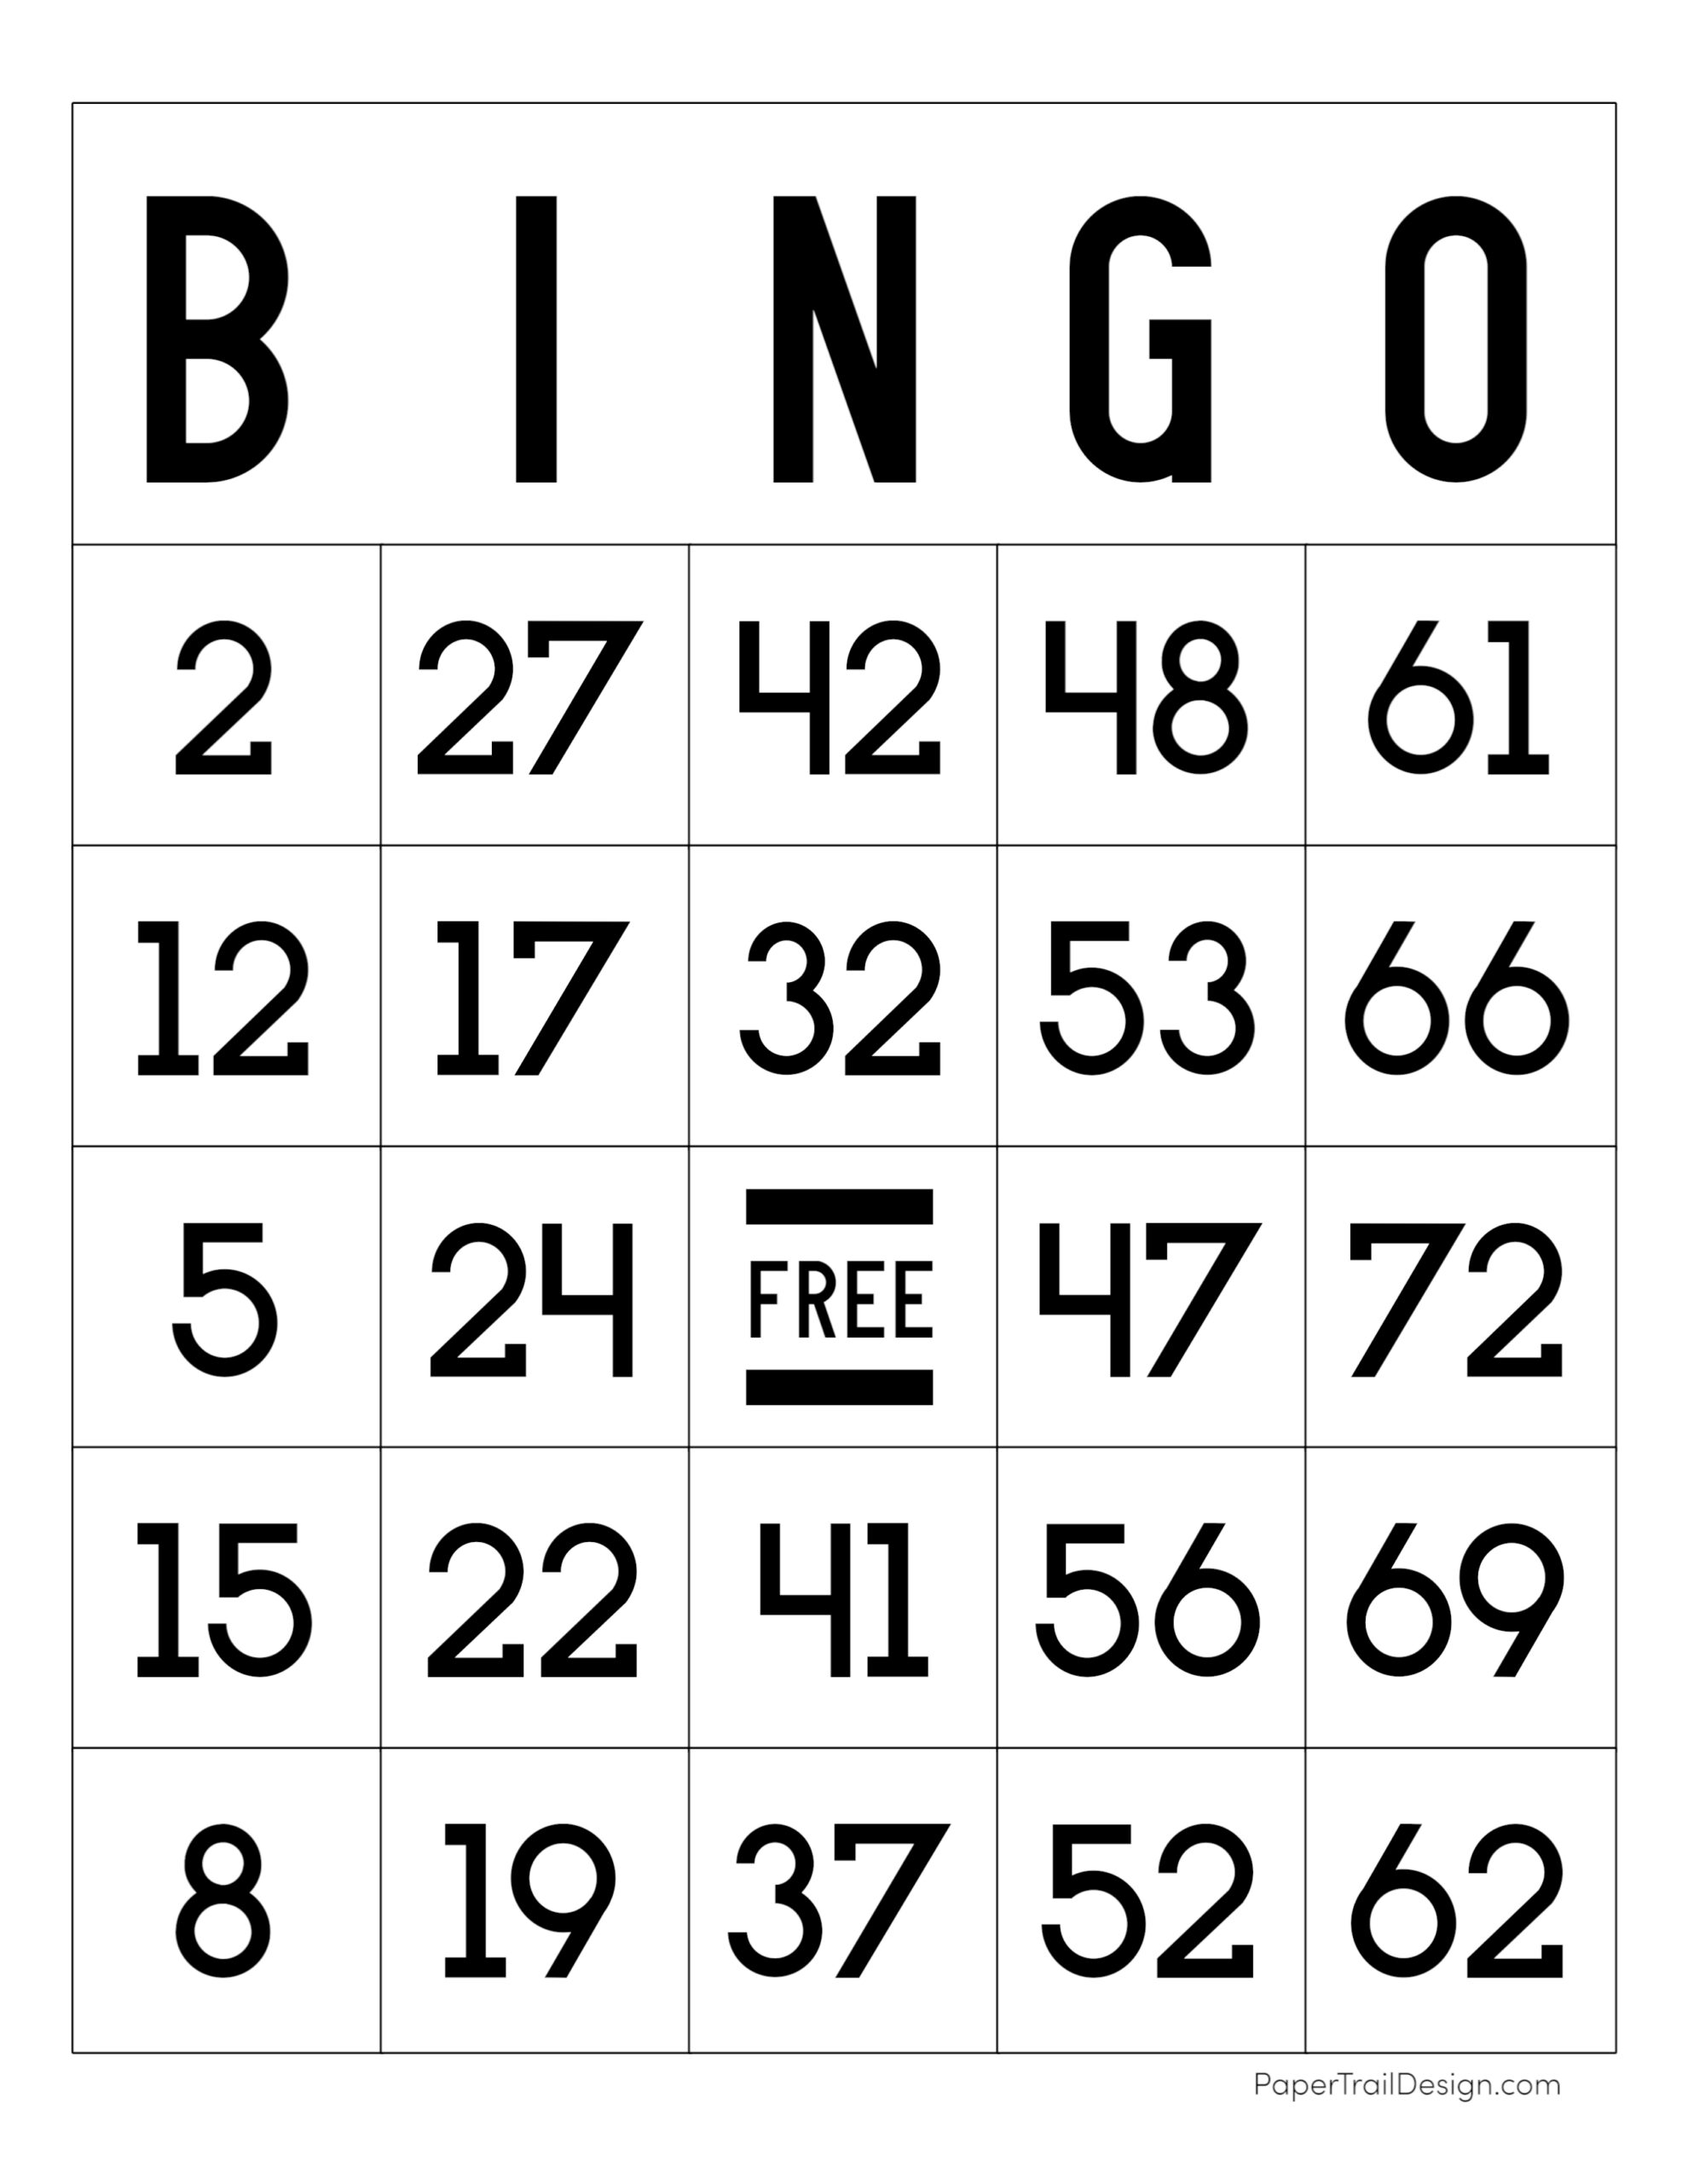 roleta de bingo preço